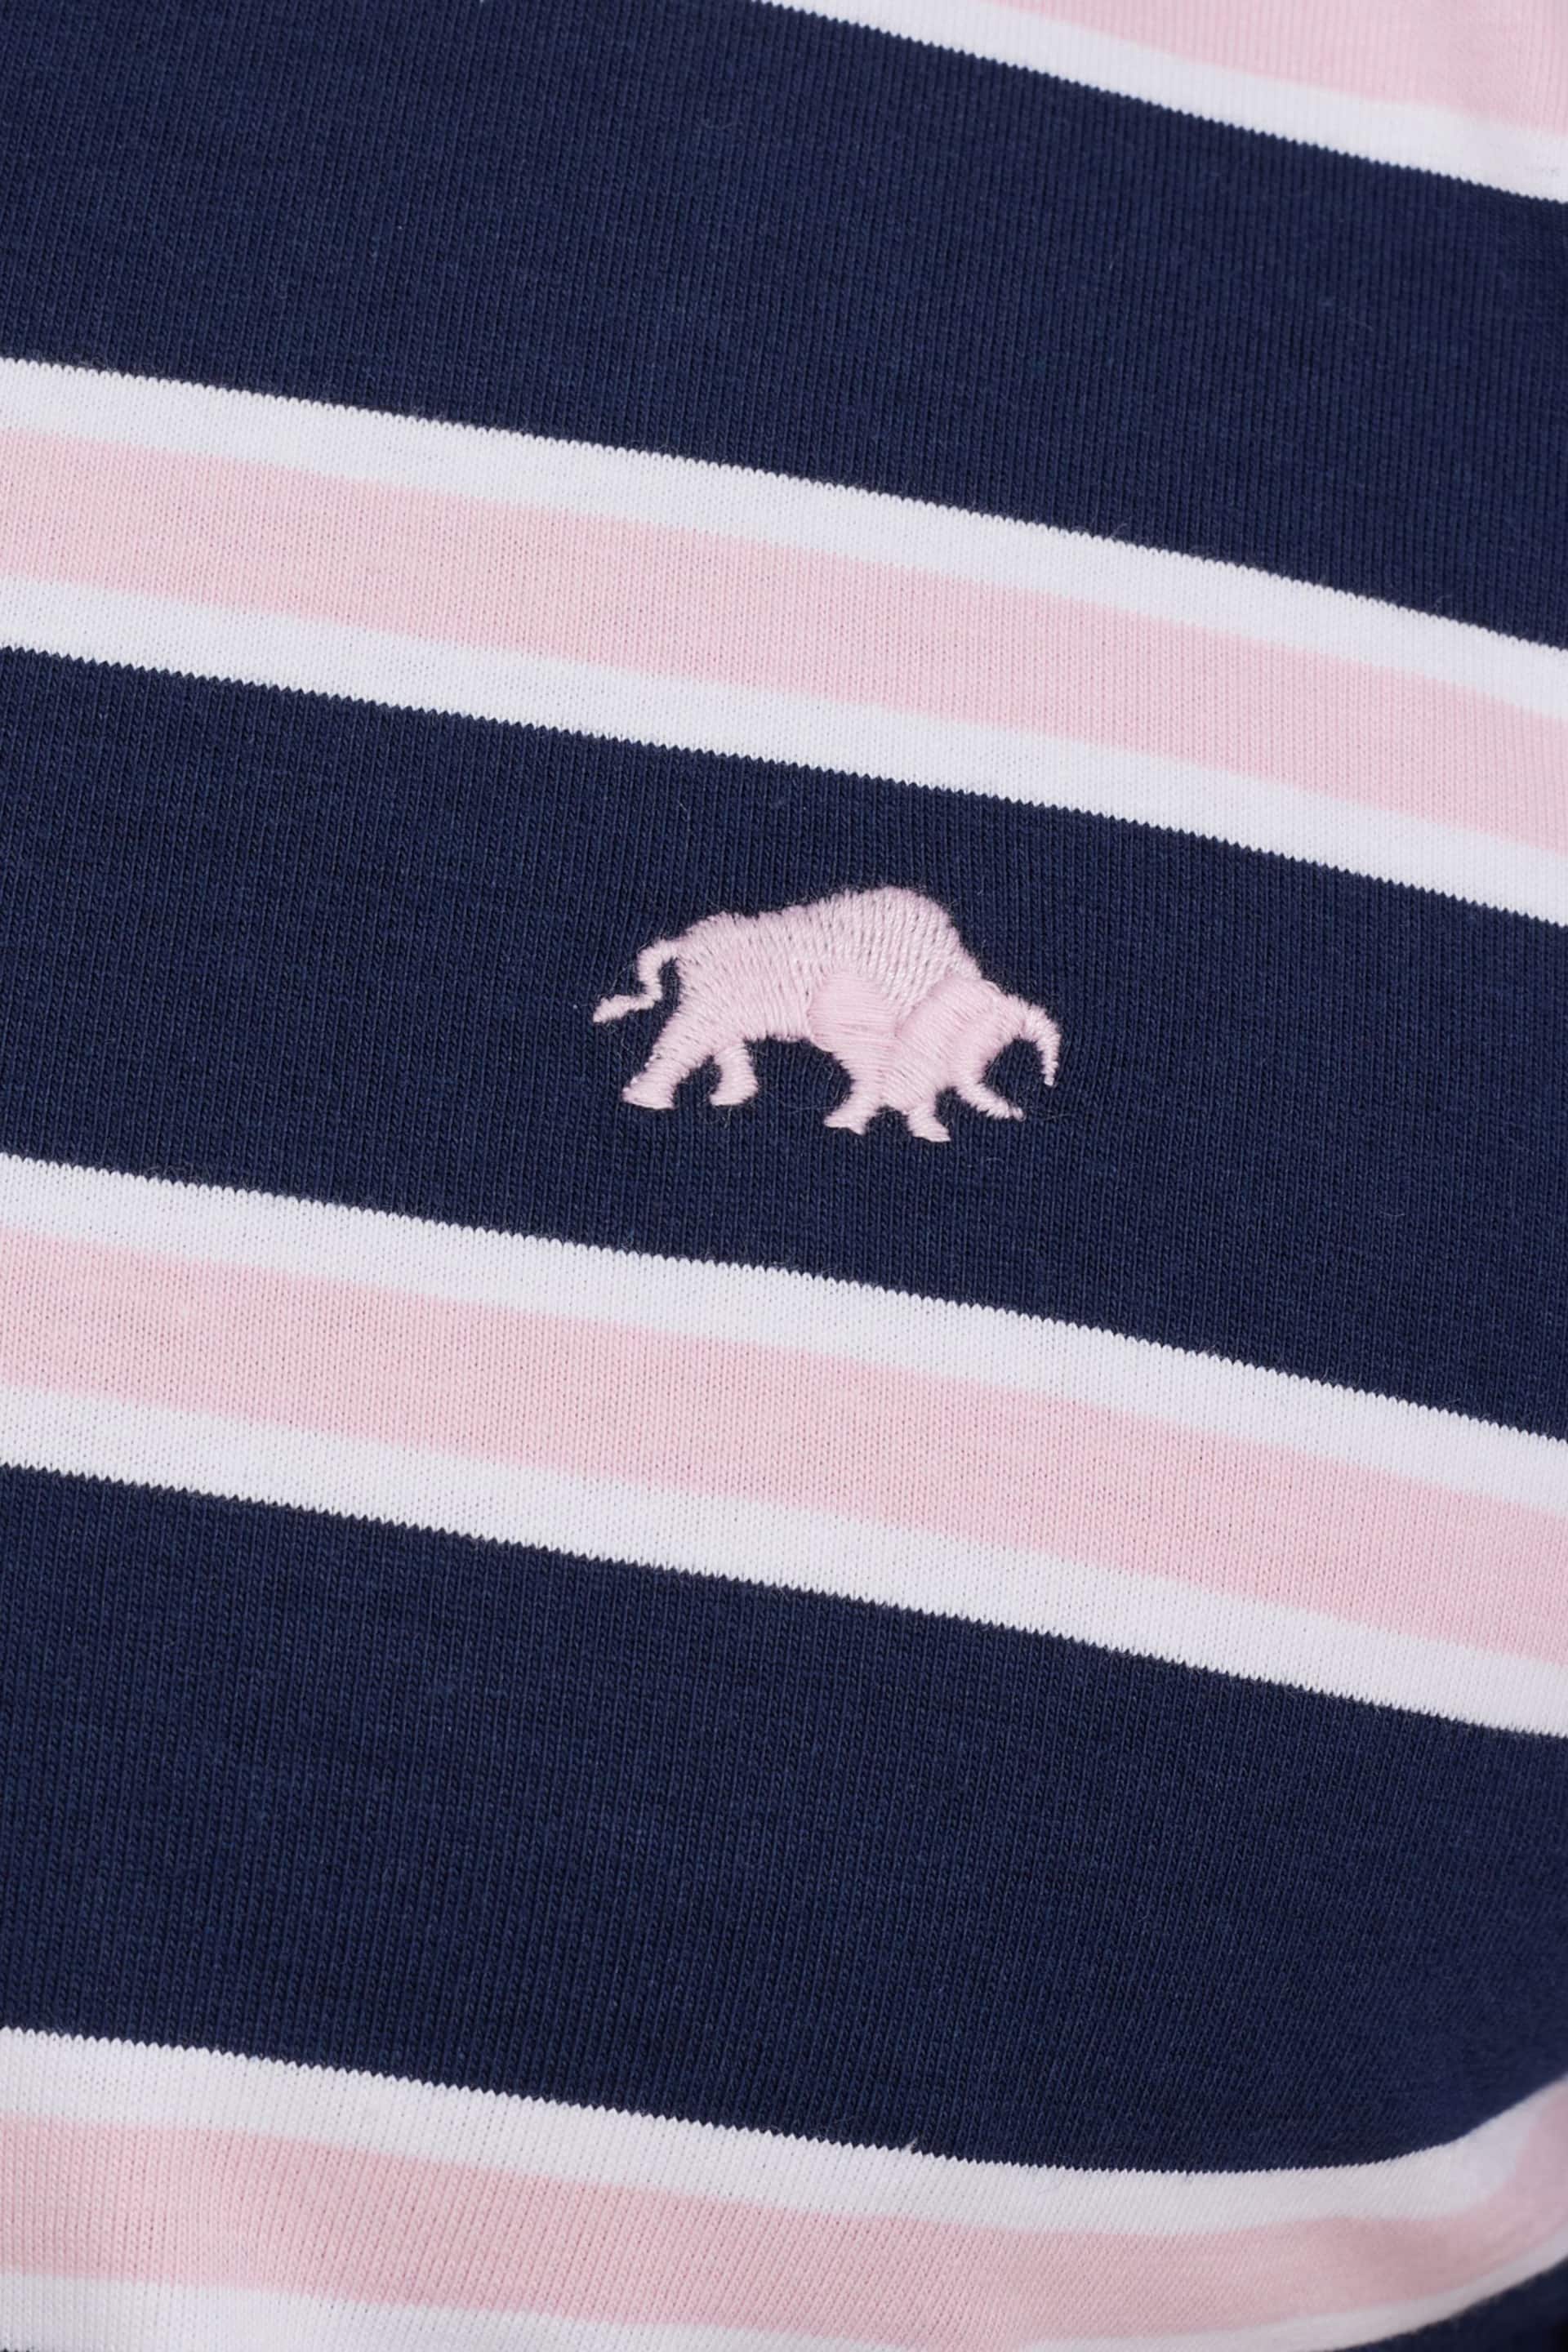 Raging Bull Pink Tram Stripe Jersey Polo Shirt - Image 7 of 7